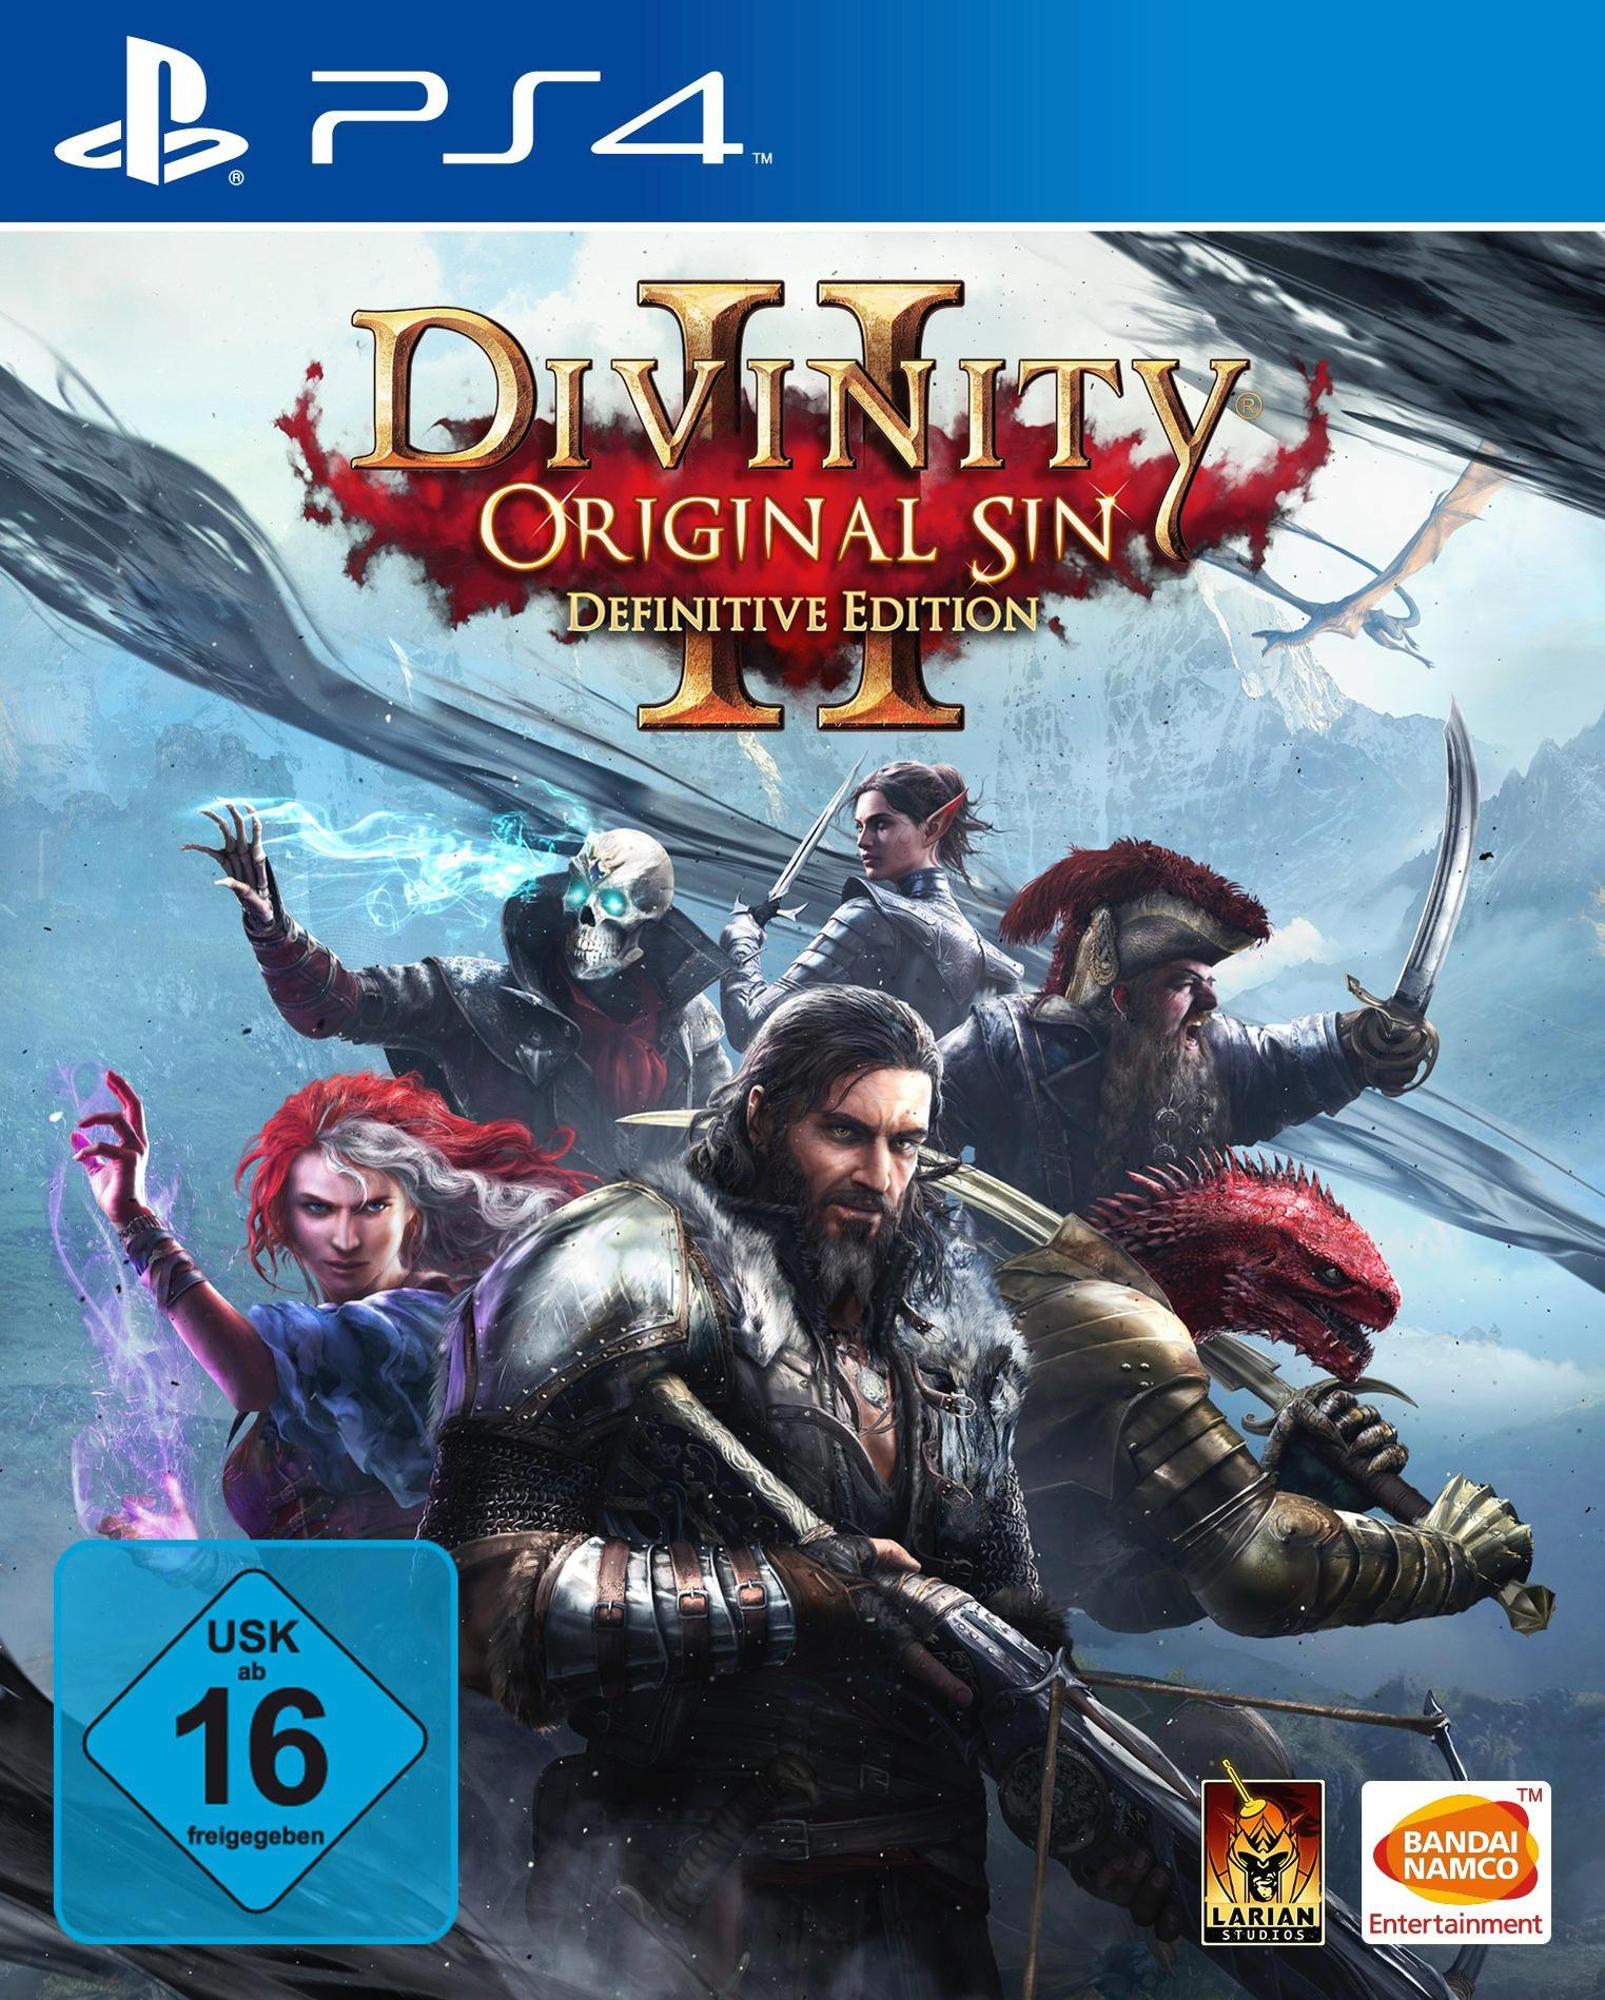 - Original [PlayStation 4] 2 Divinity: - Edition Definitive Sin